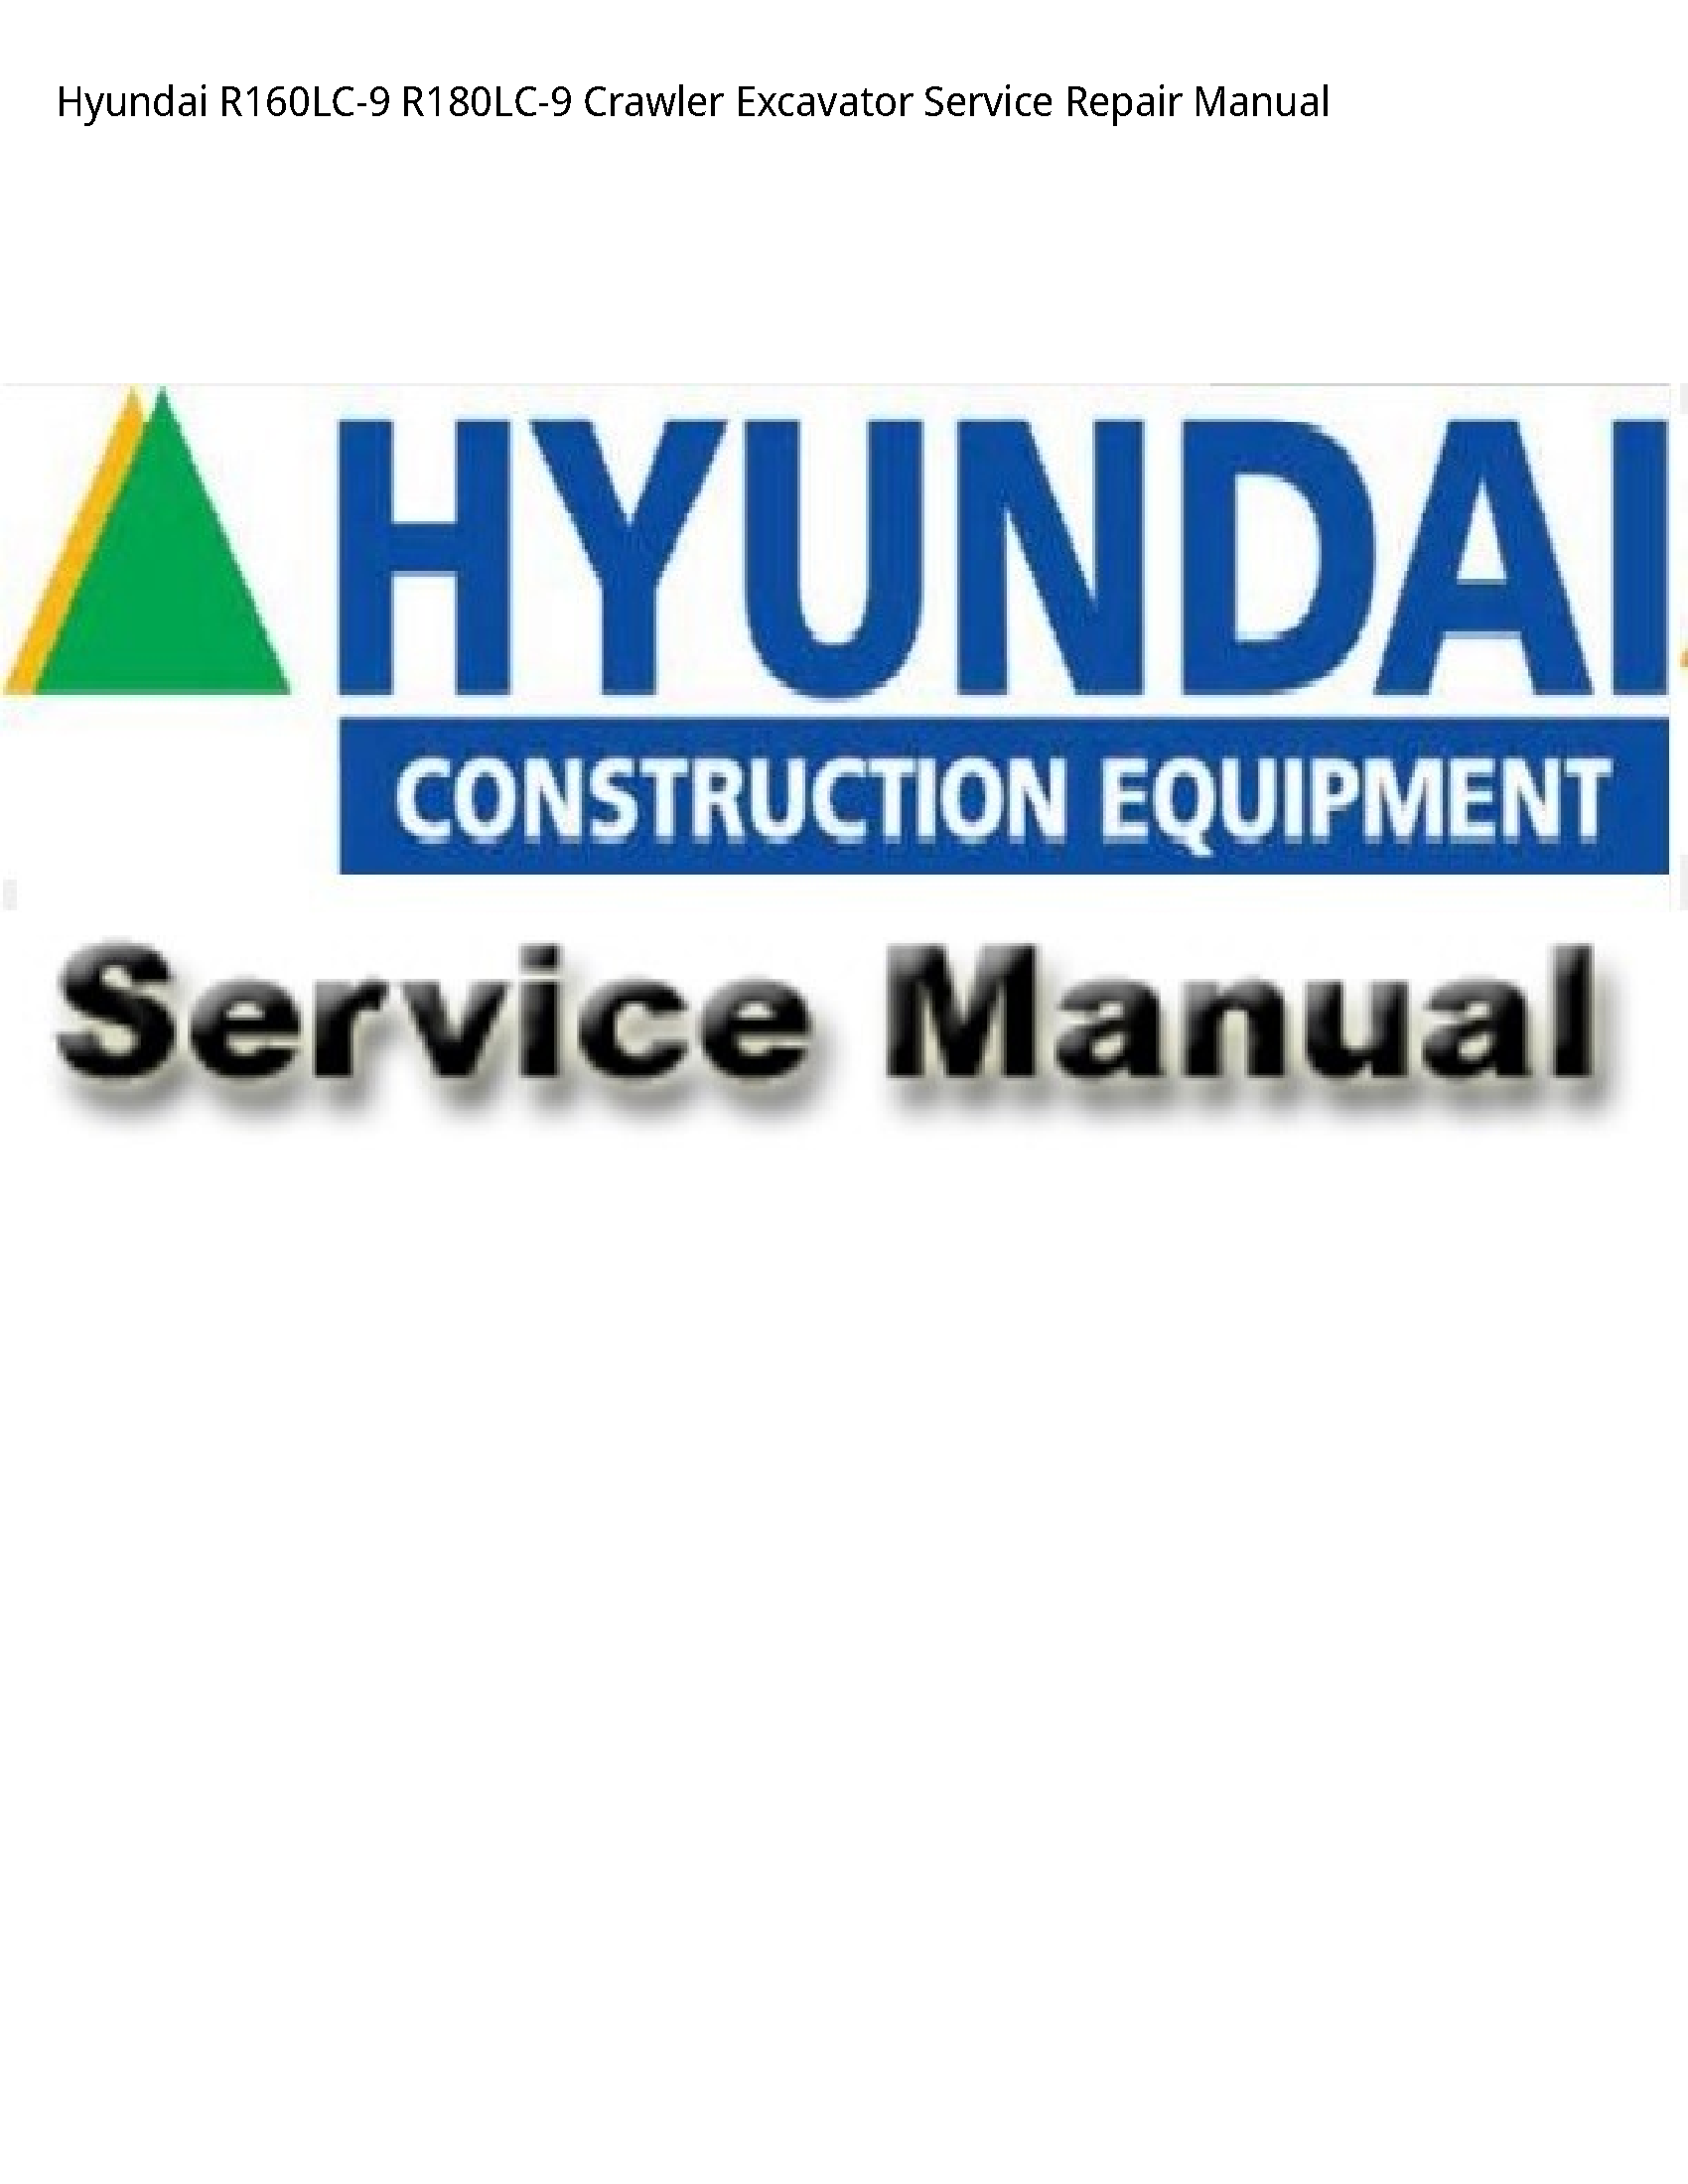 Hyundai R160LC-9 Crawler Excavator manual